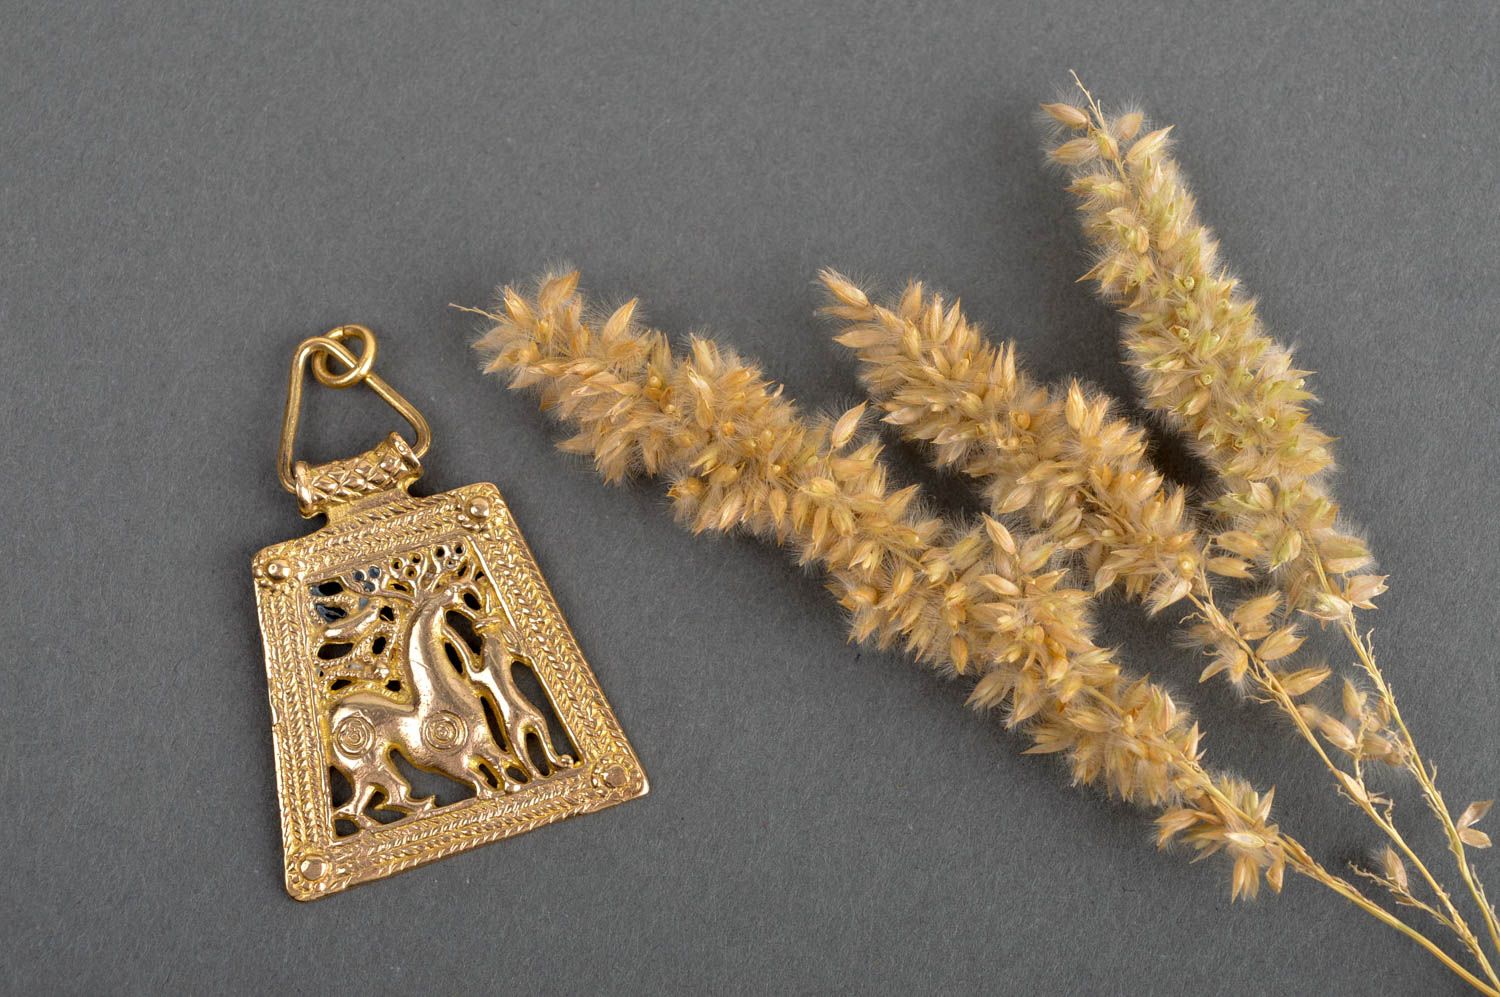 Unusual handmade metal pendant homemade neck pendant design cool jewelry photo 1